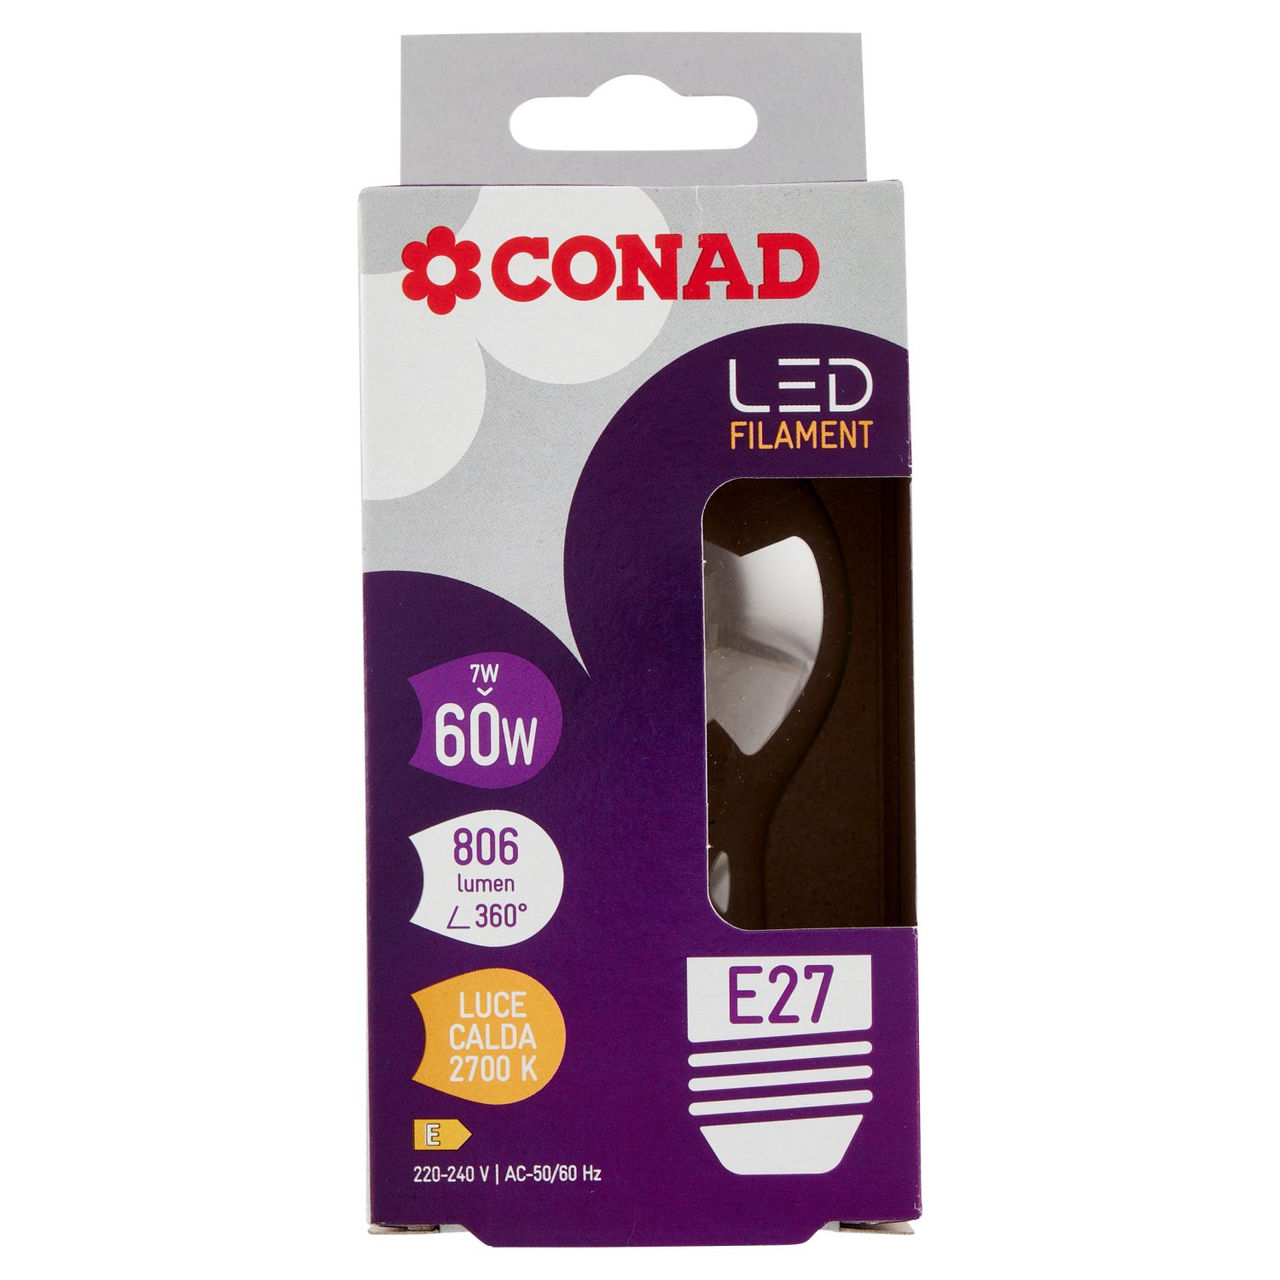 CONAD Led Filament 7W 806 Lumen E27 Luce Calda